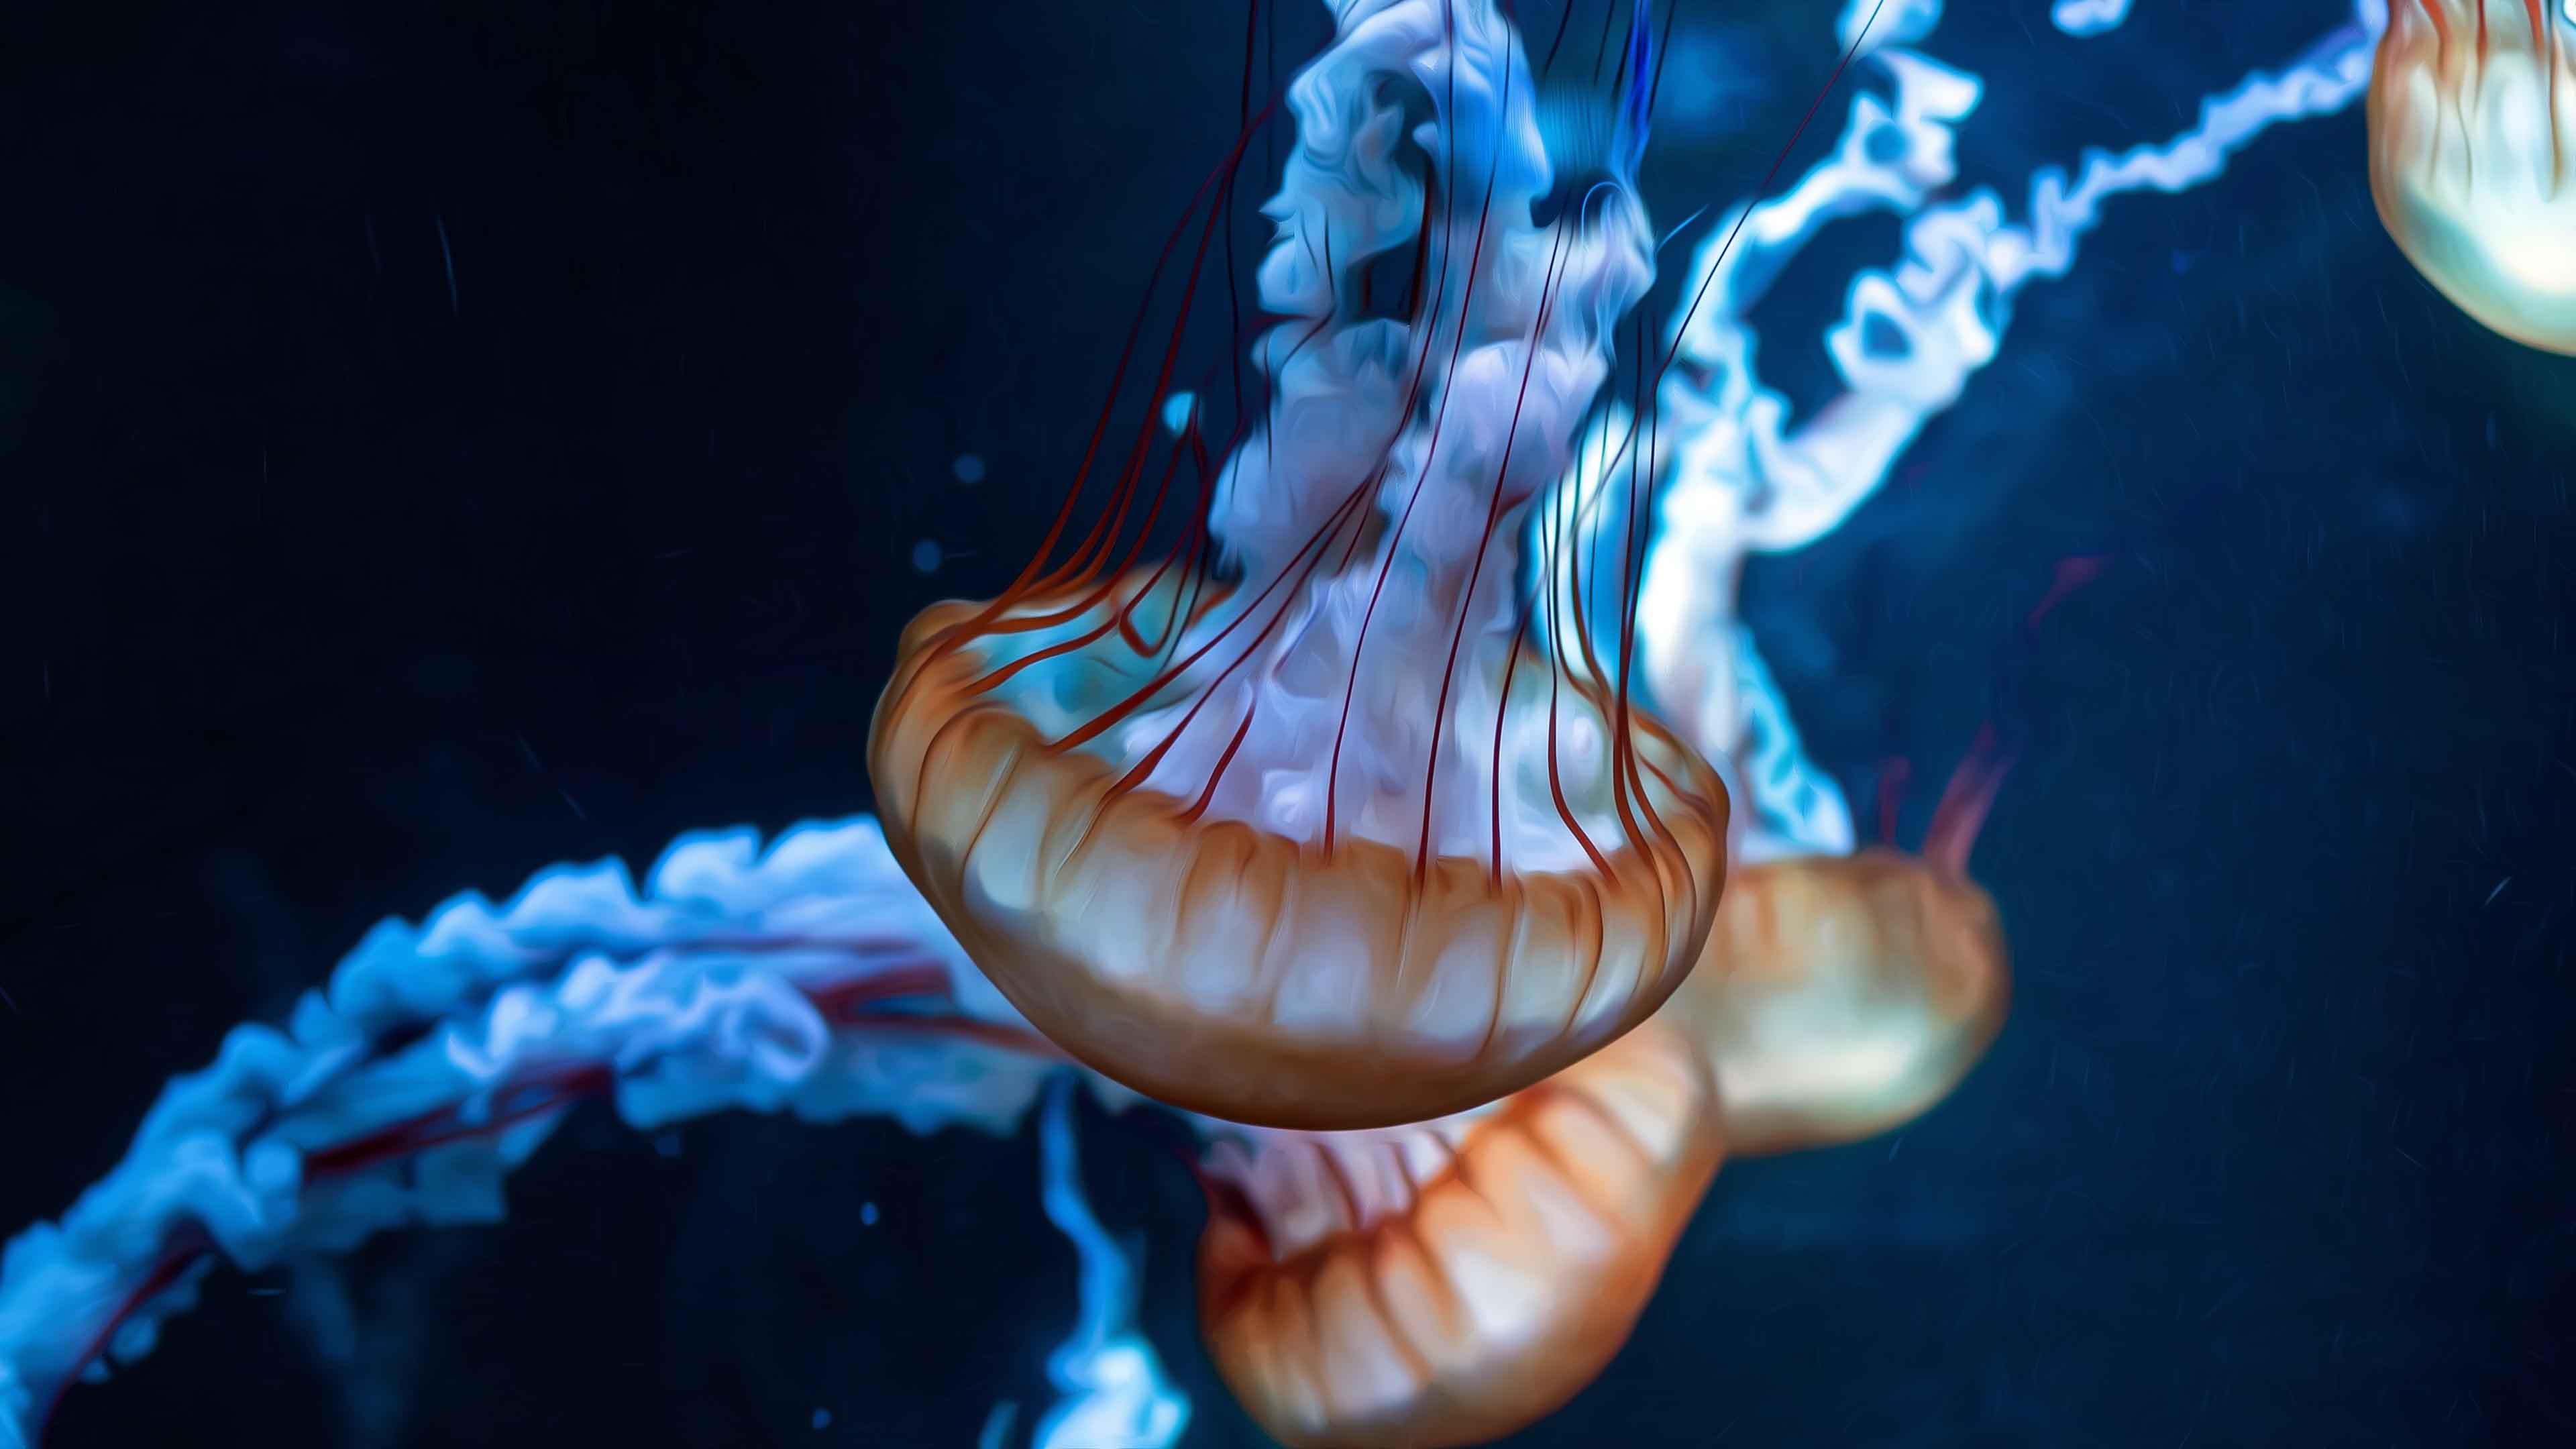 Jellyfish painting, 4K wallpaper, Artistic marine life, Vibrant underwater creation, 3840x2160 4K Desktop